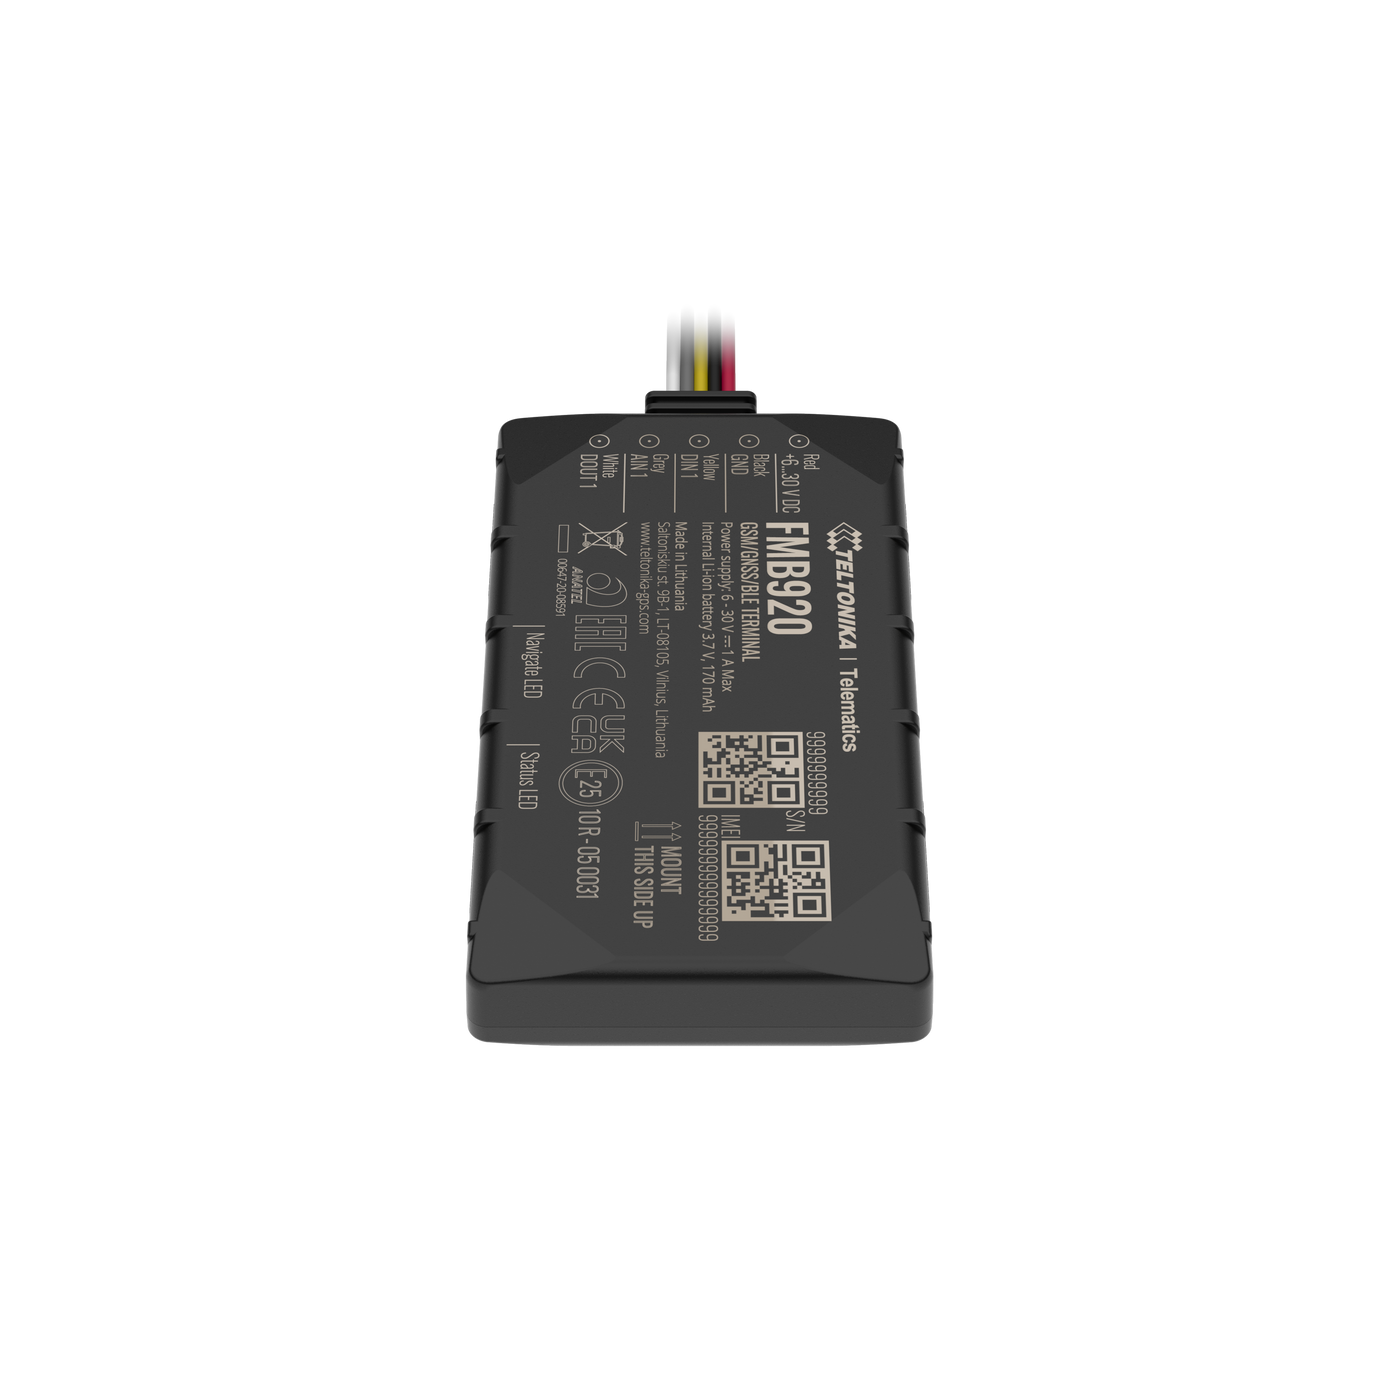 Teltonika FMB920 - GPS with Accelerometer